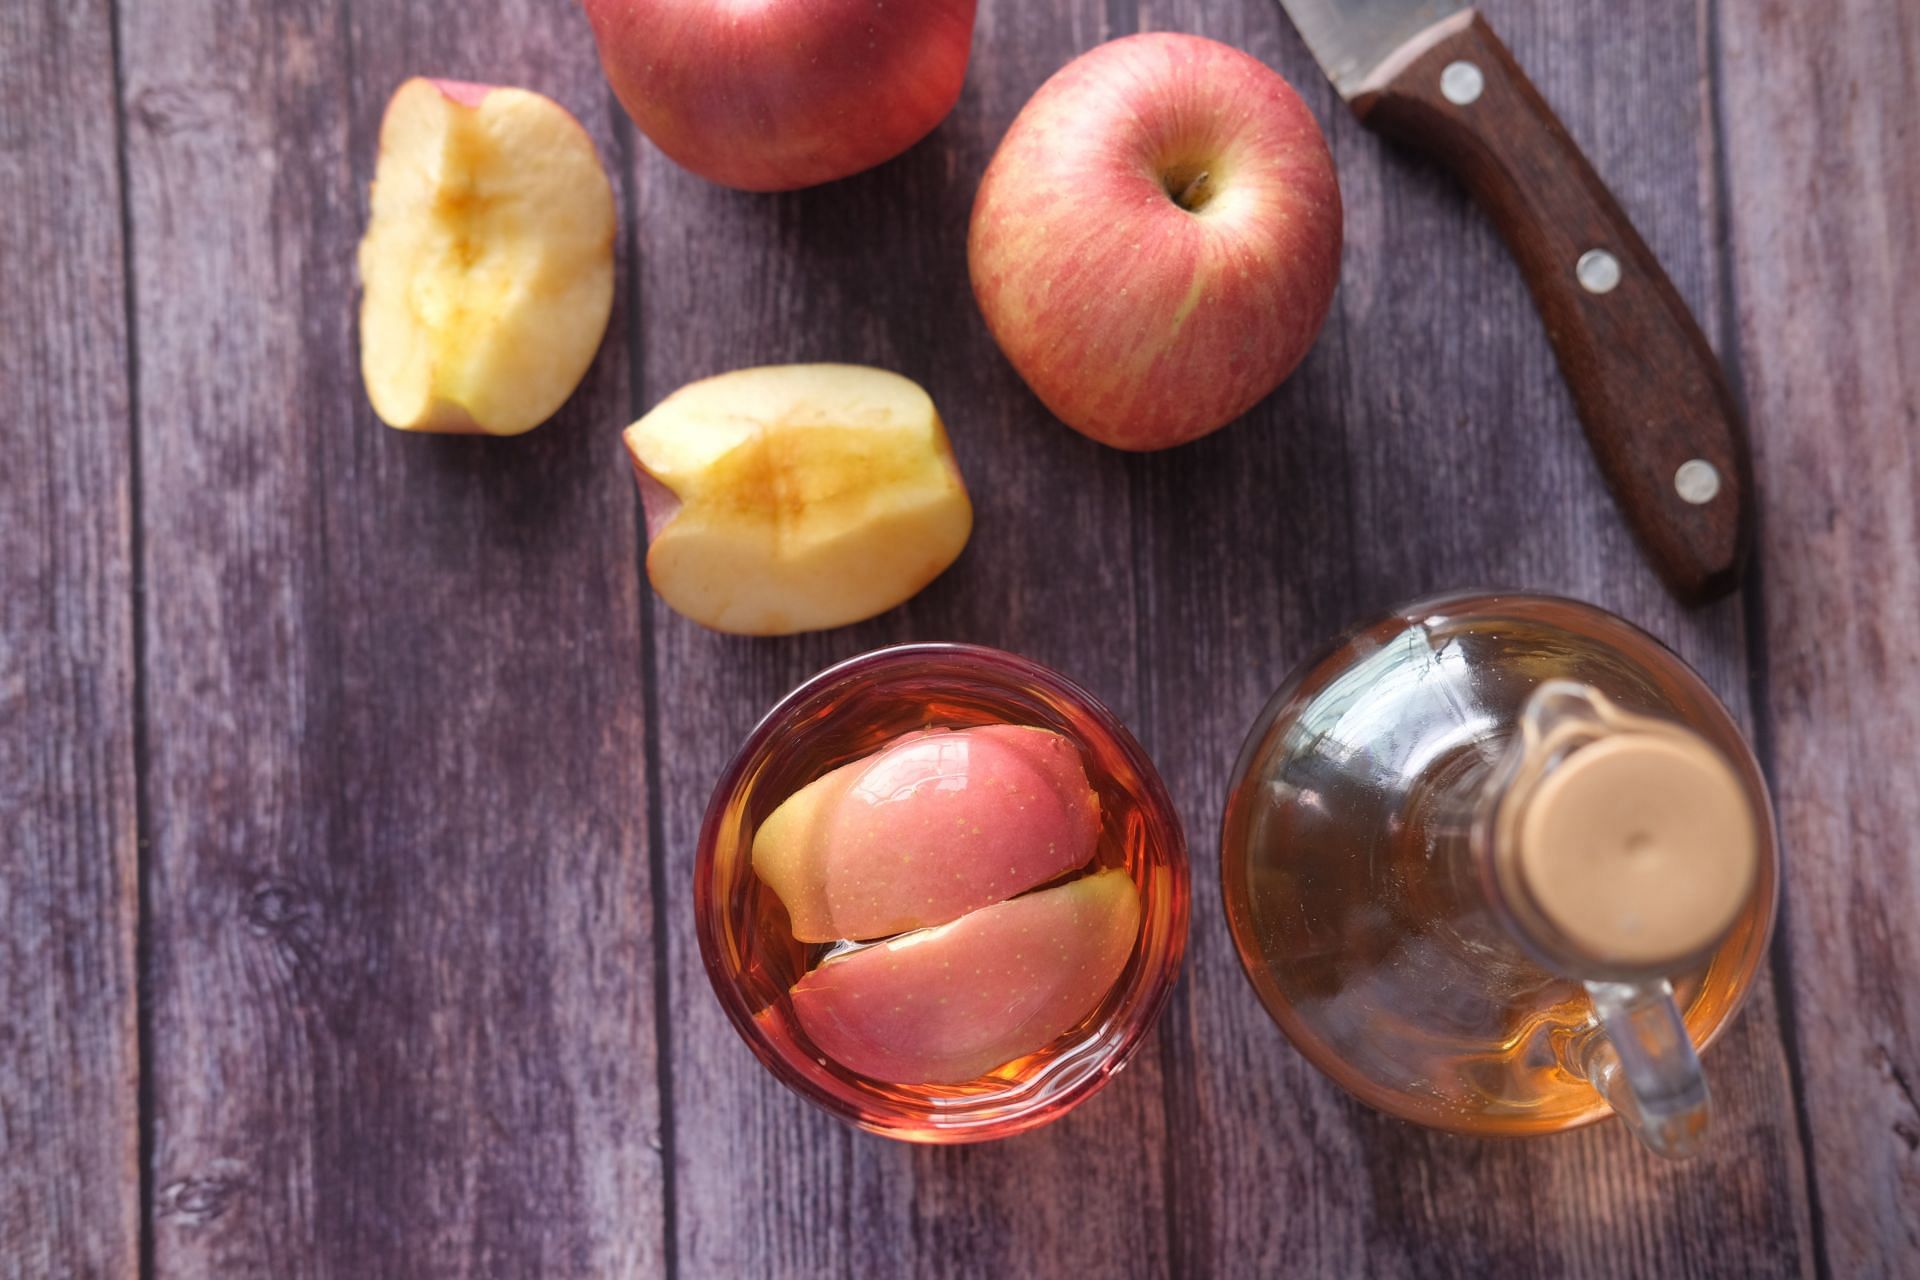 Apple cider vinegar provides a number of health benefits (Image via unsplash/towfiqu barbhuiya)